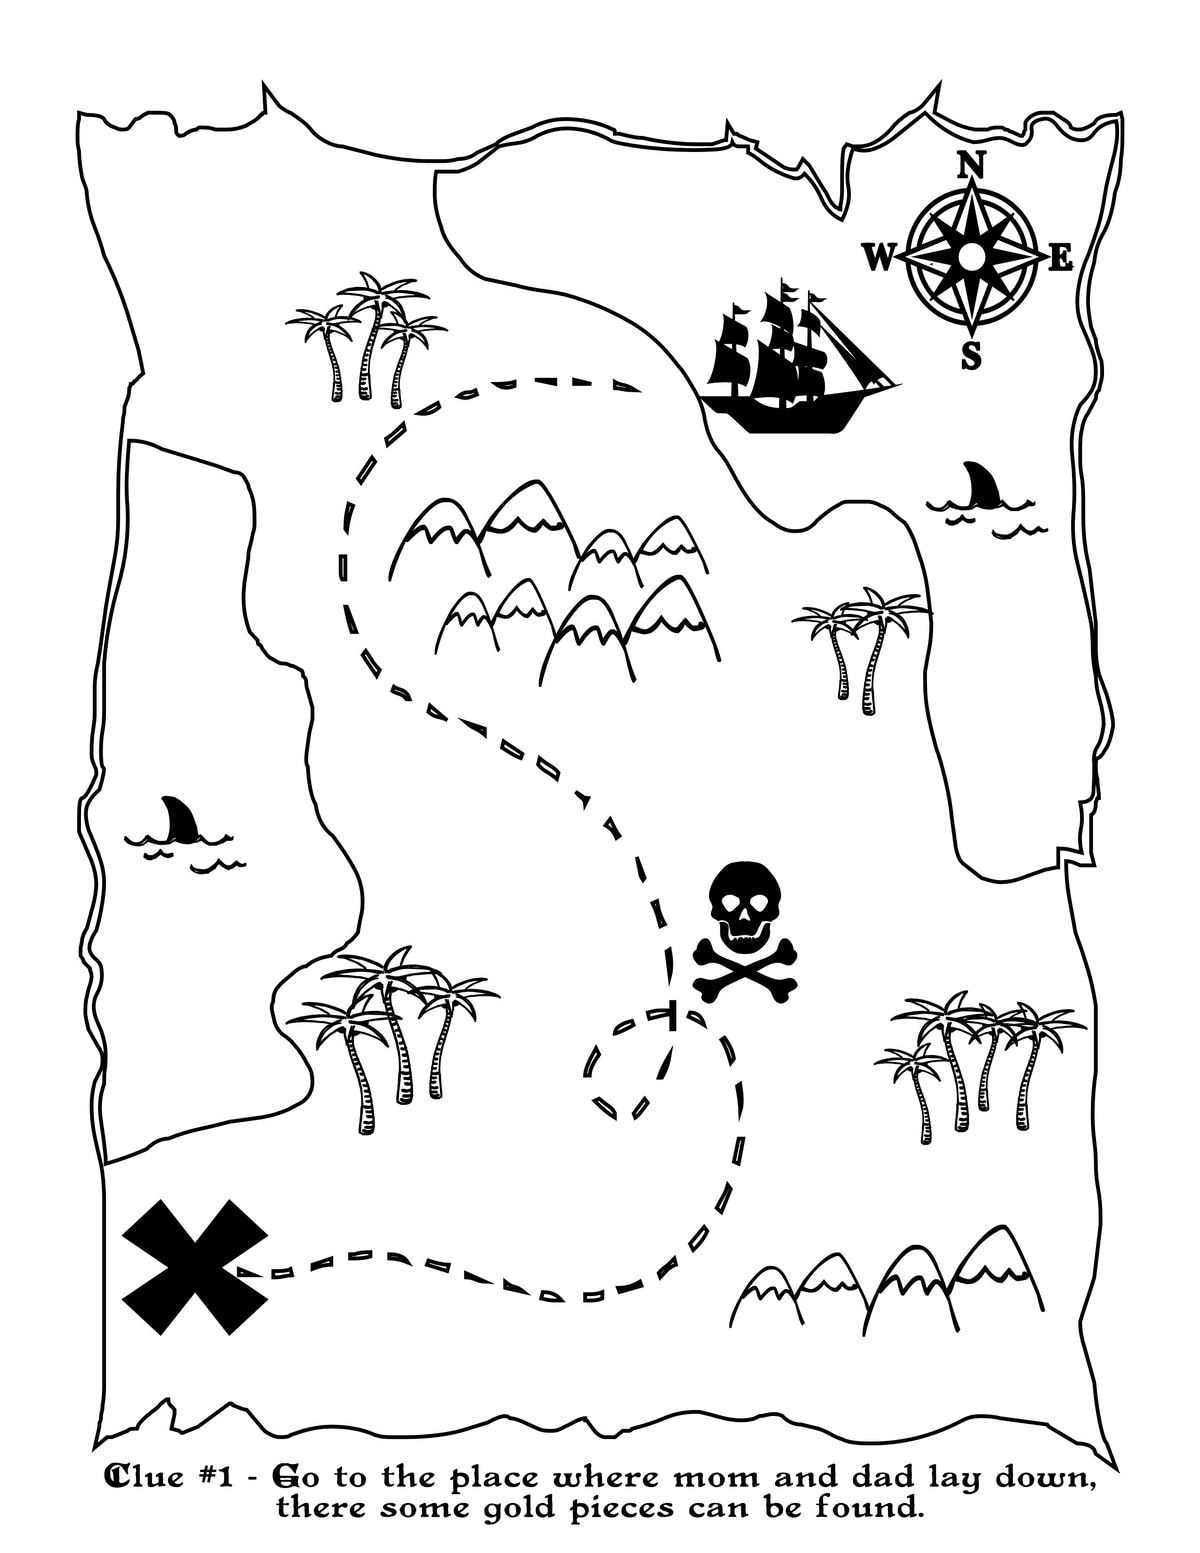 treasure map clipart black and white - photo #43